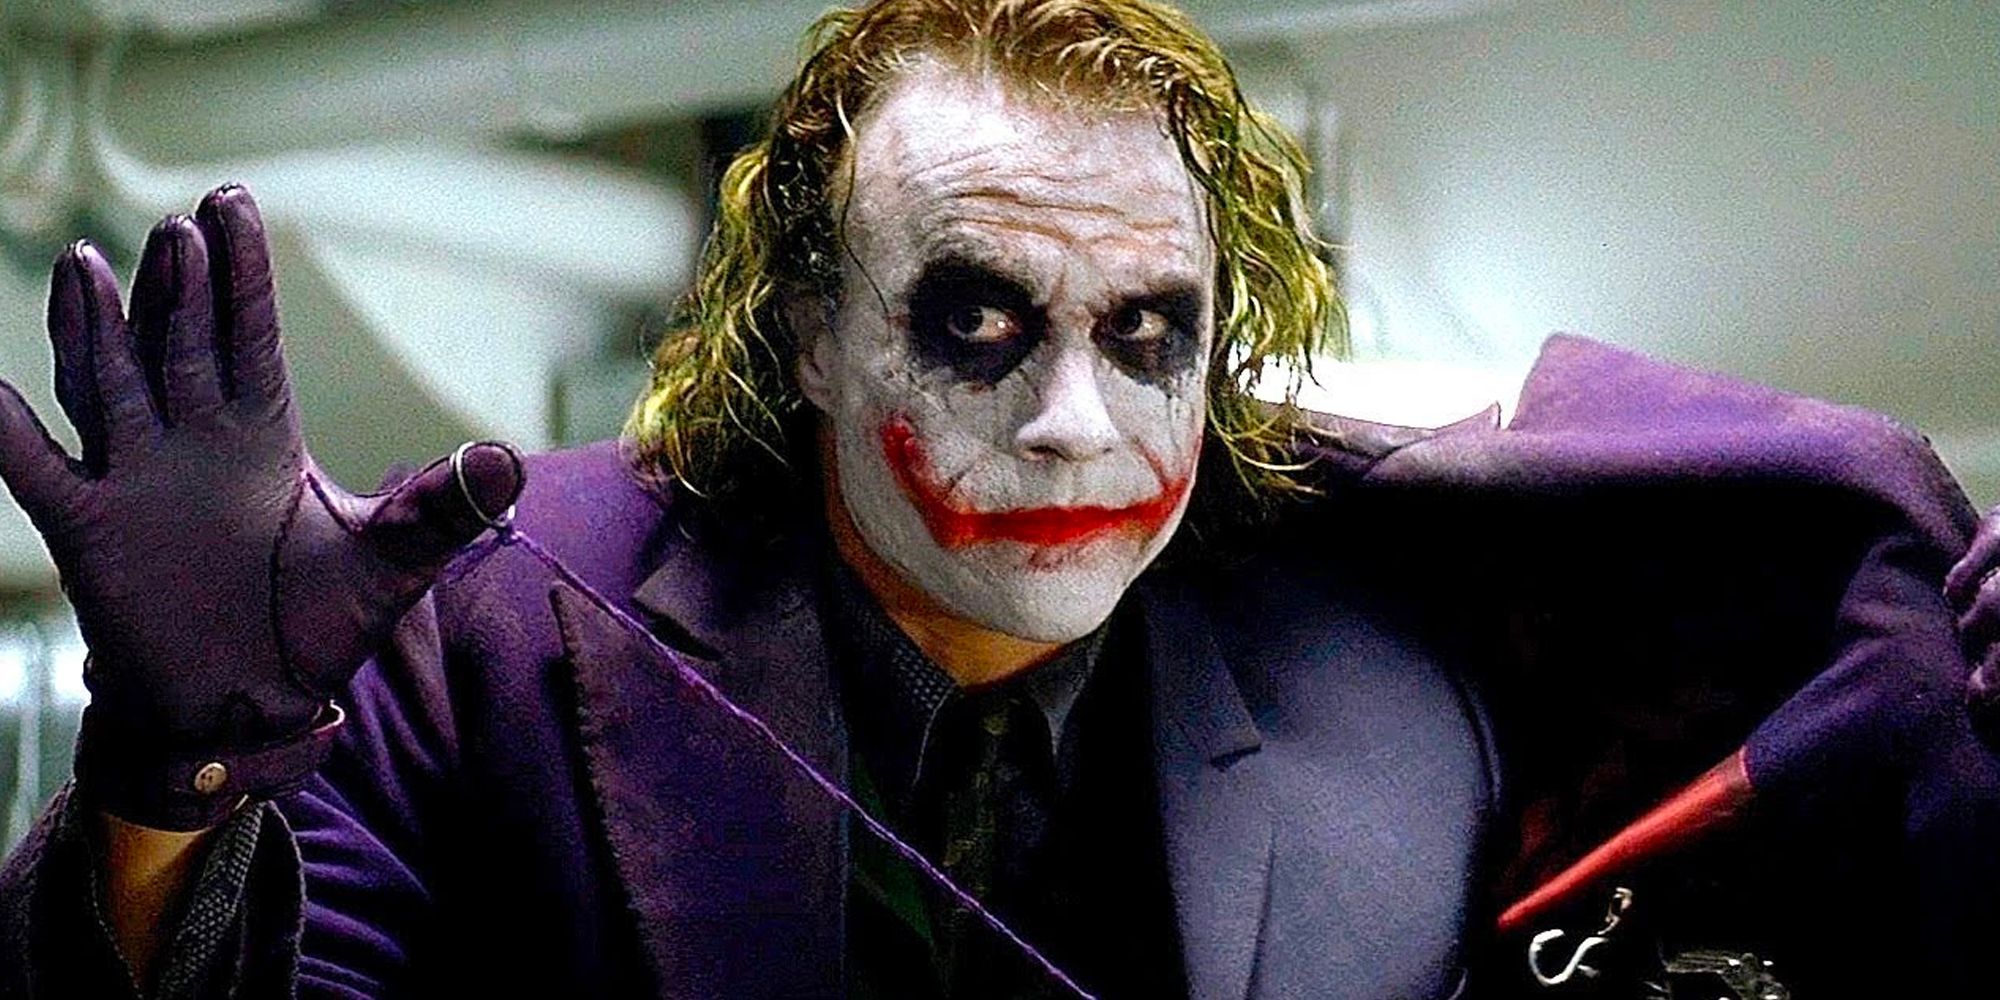 Joker showing a bomb inside his jacket in The Dark Knight.